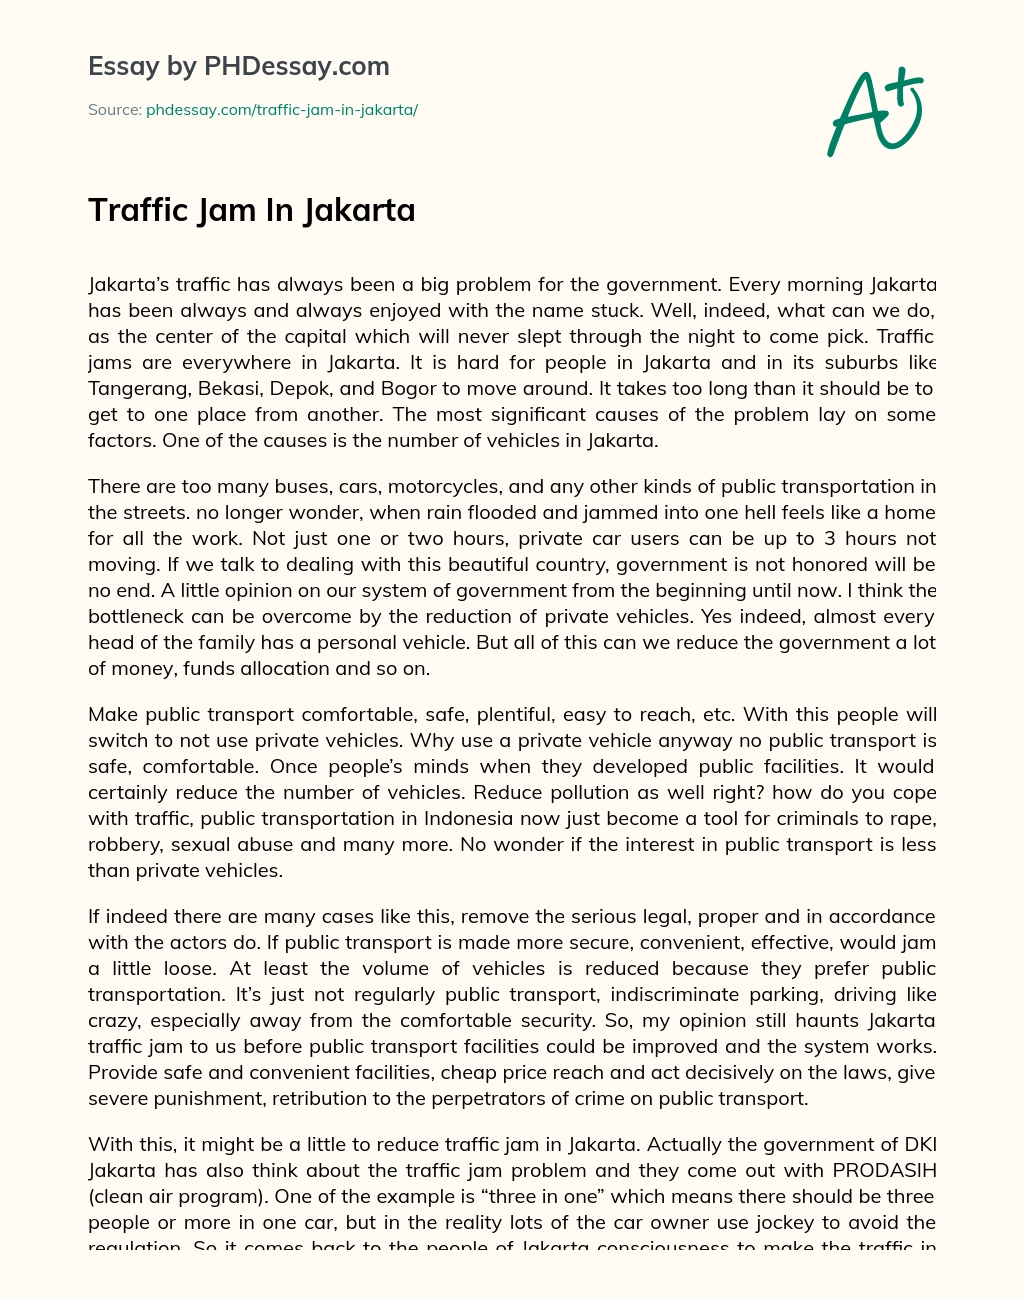 Traffic Jam In Jakarta essay